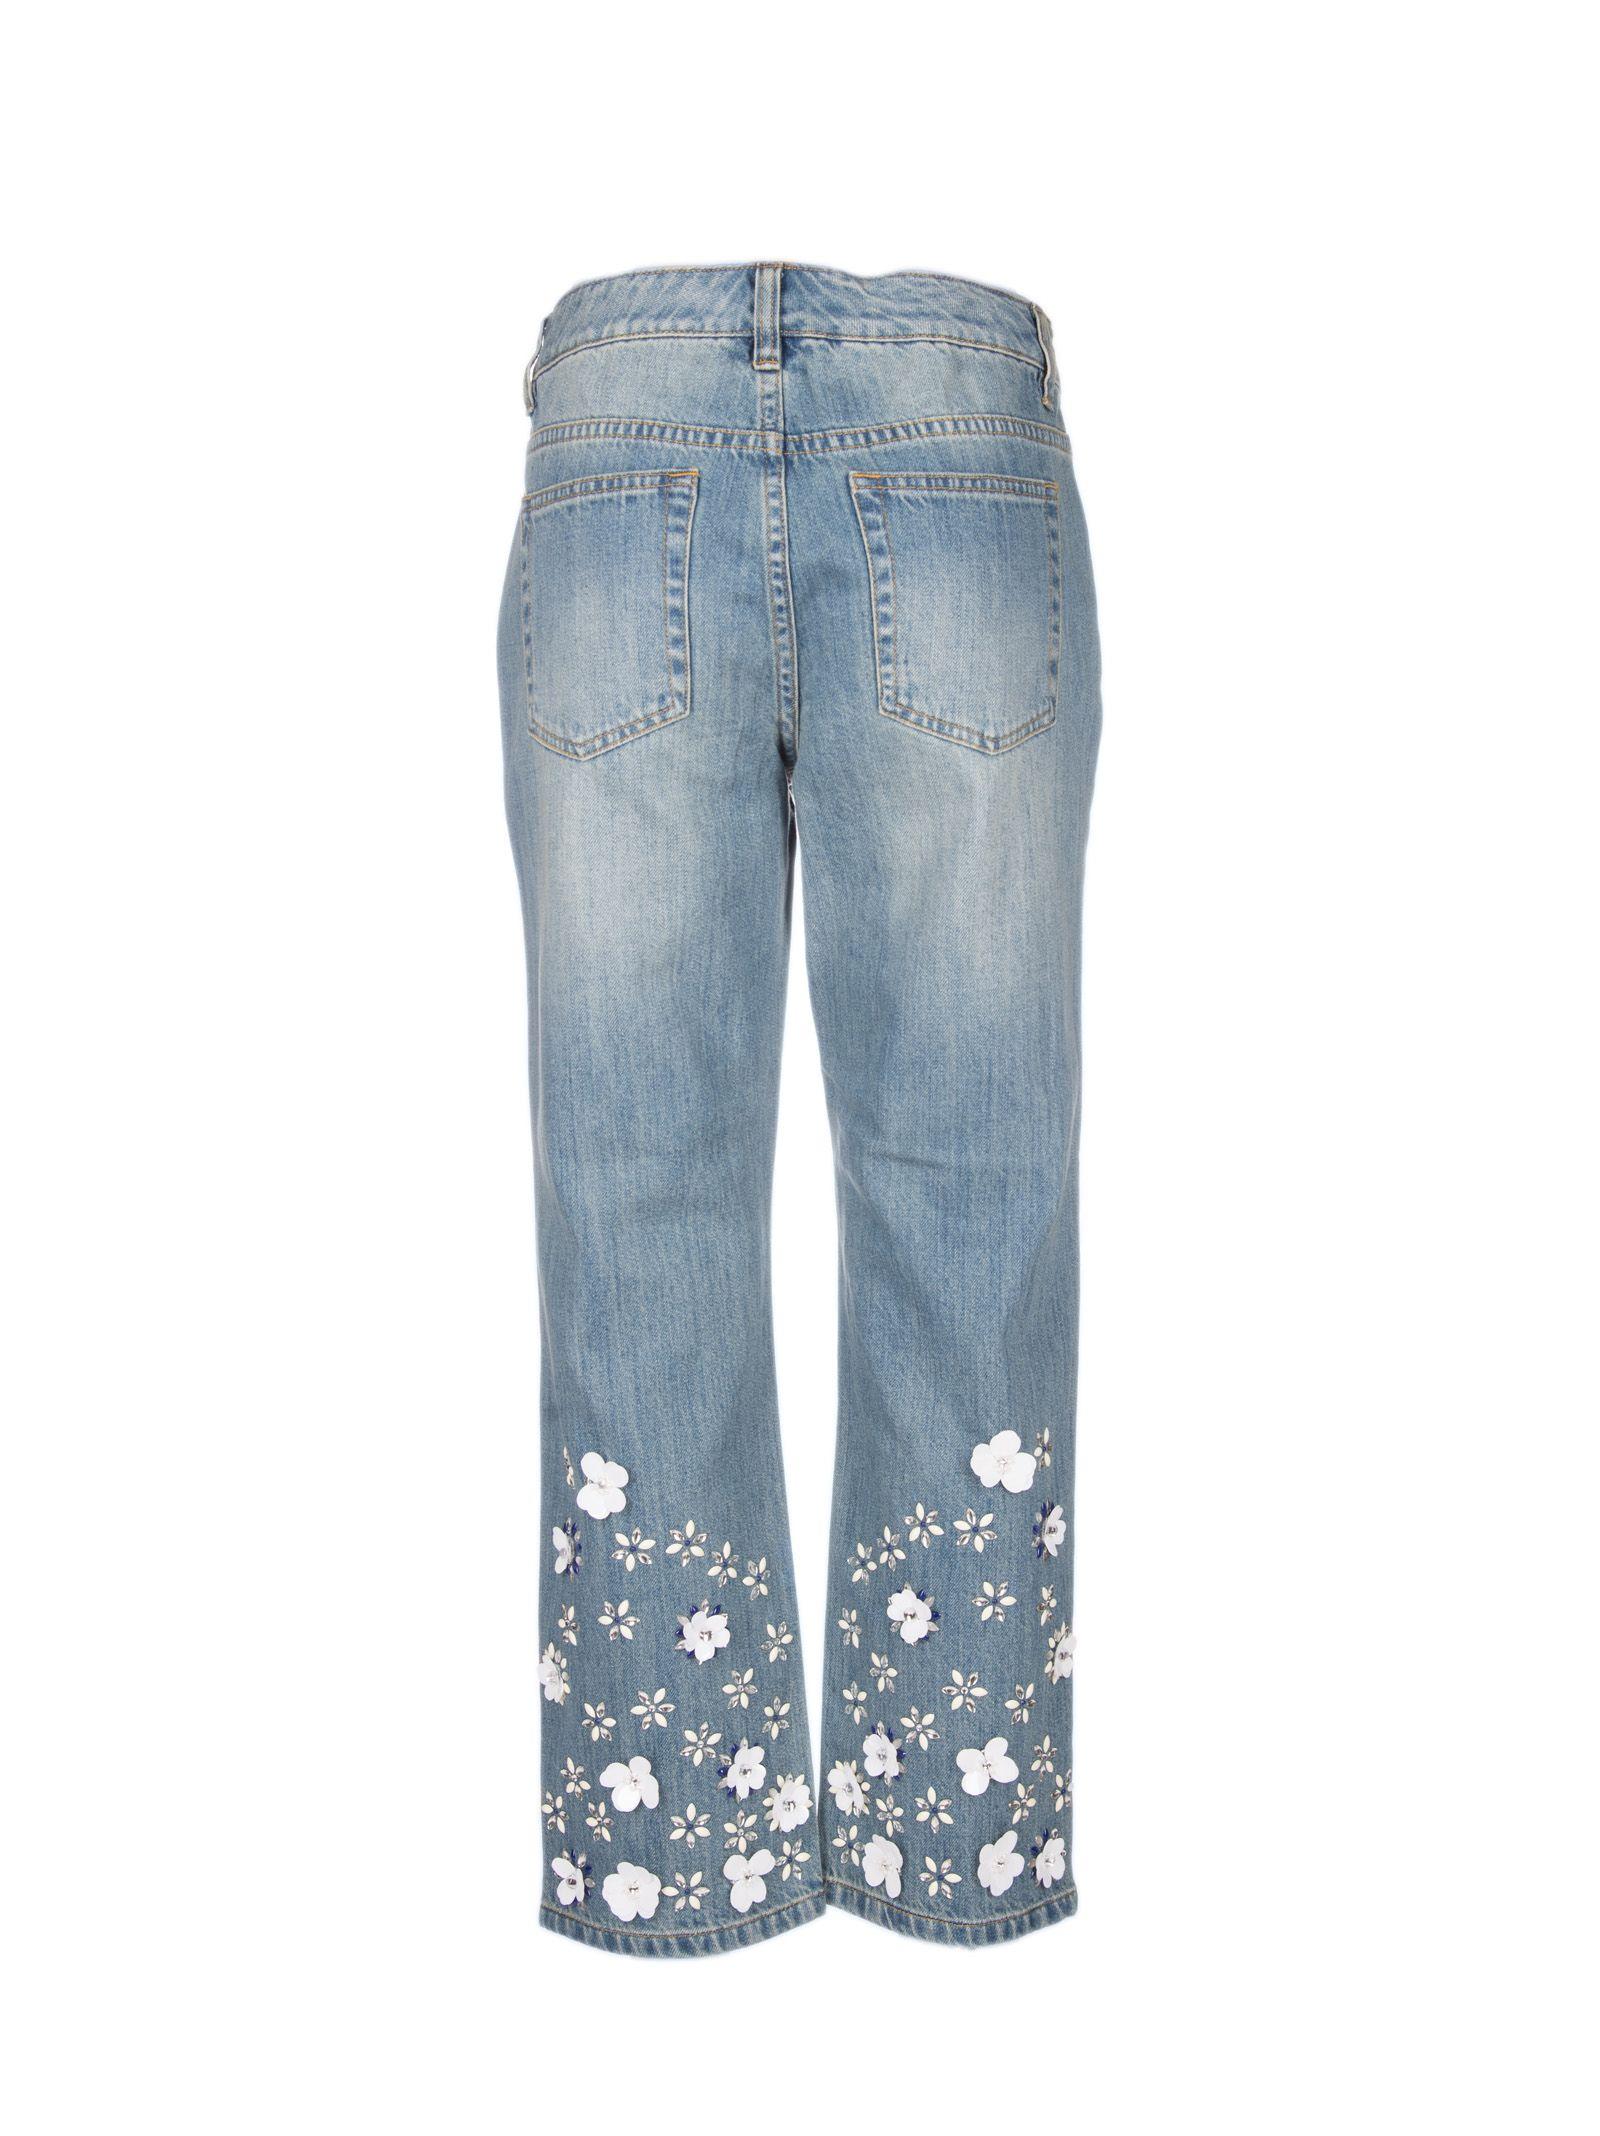 embellished cropped jeans